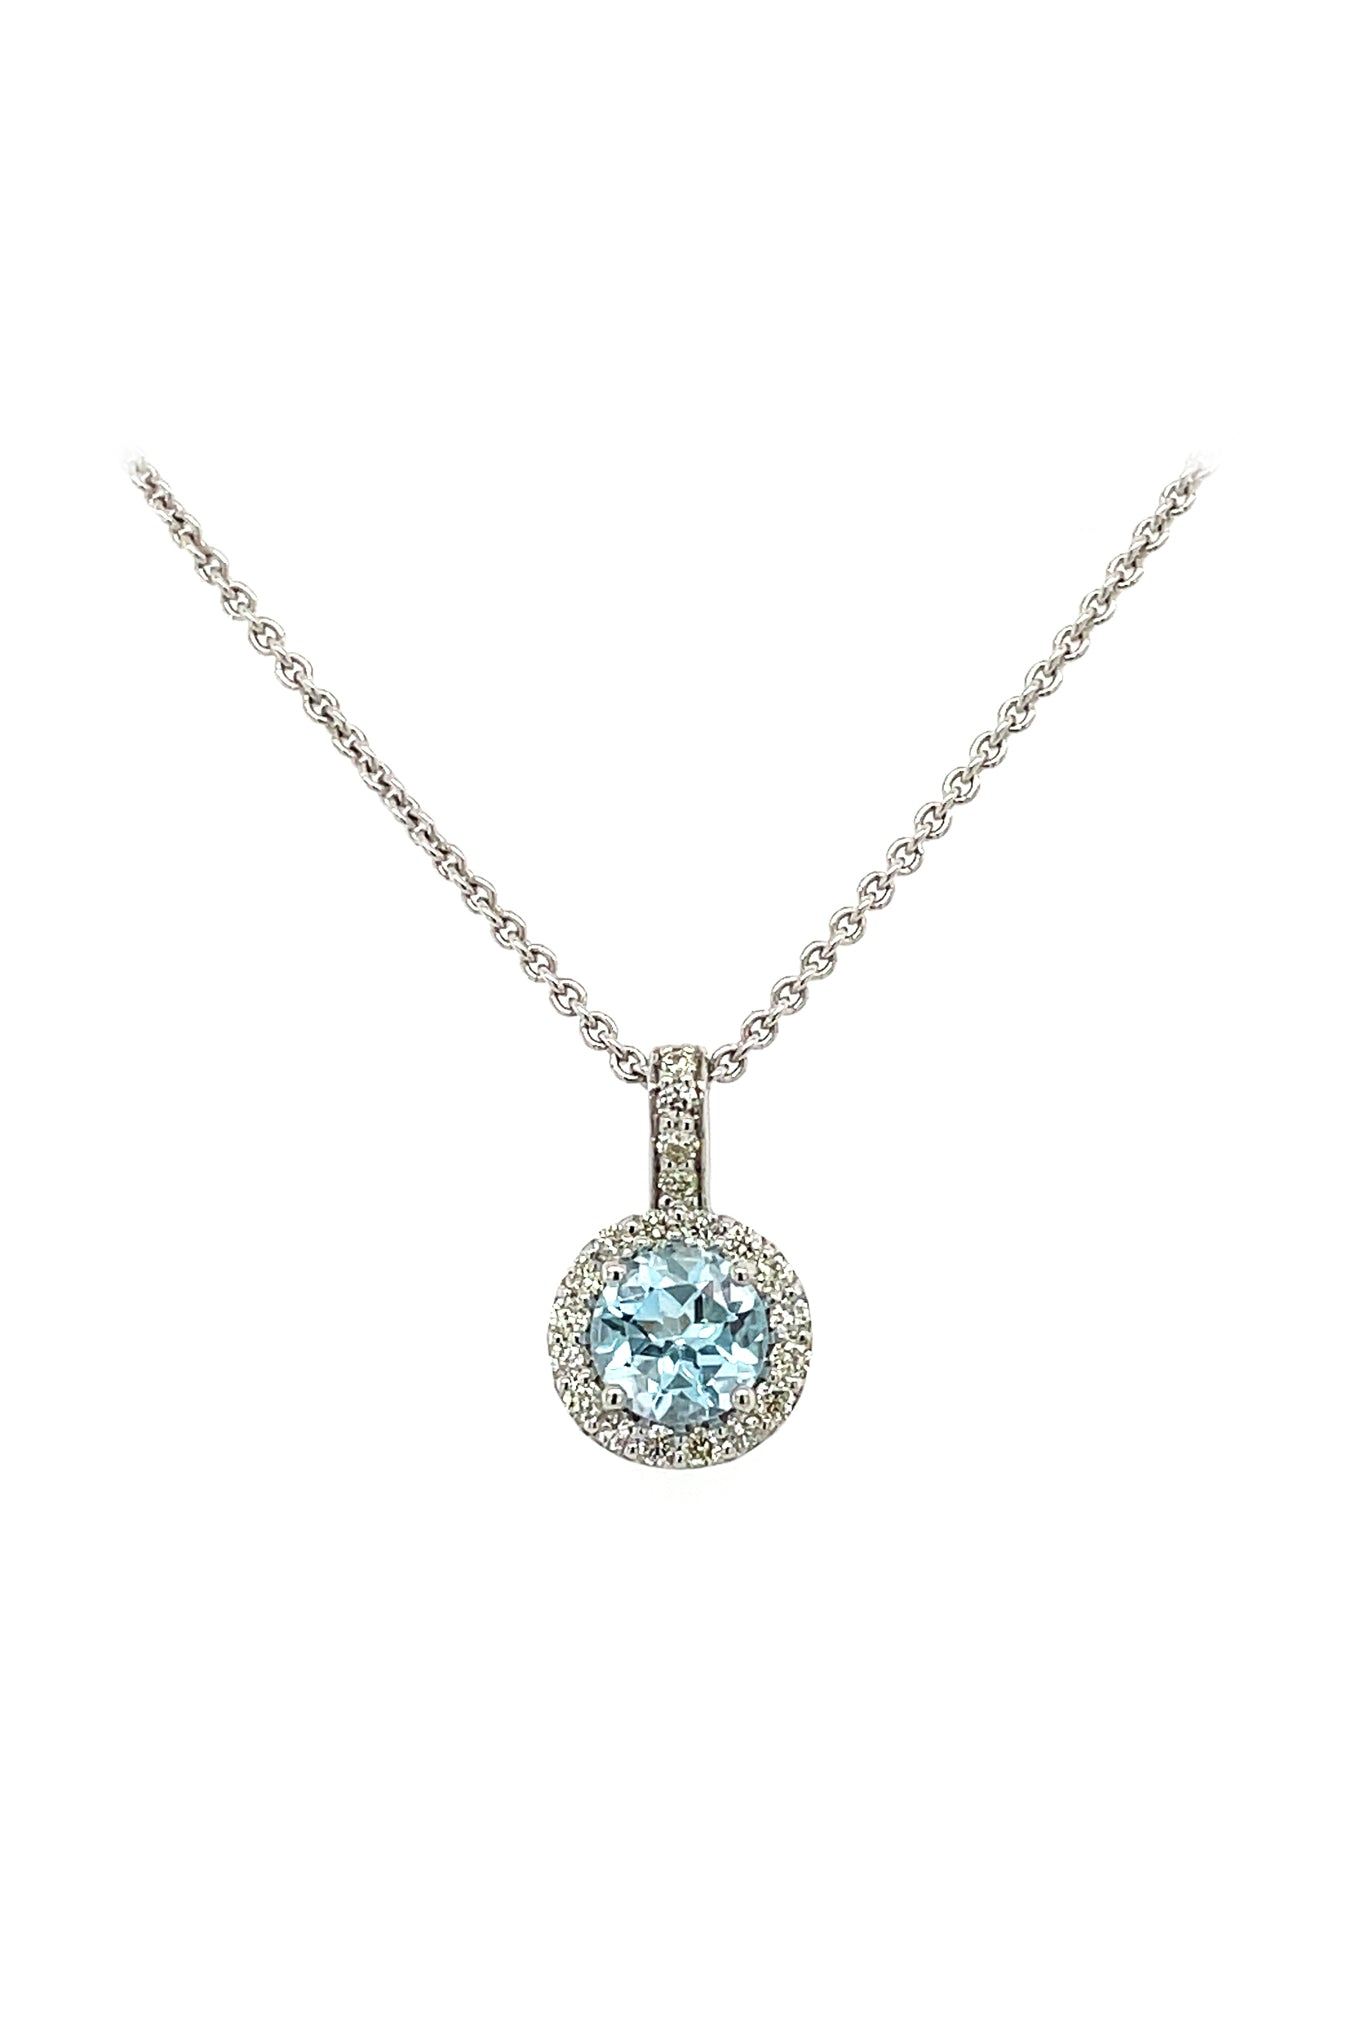 0.57 Carat Round Blue Topaz And Diamond Pendant available at LeGassick Diamonds and Jewellery Gold Coast, Australia.